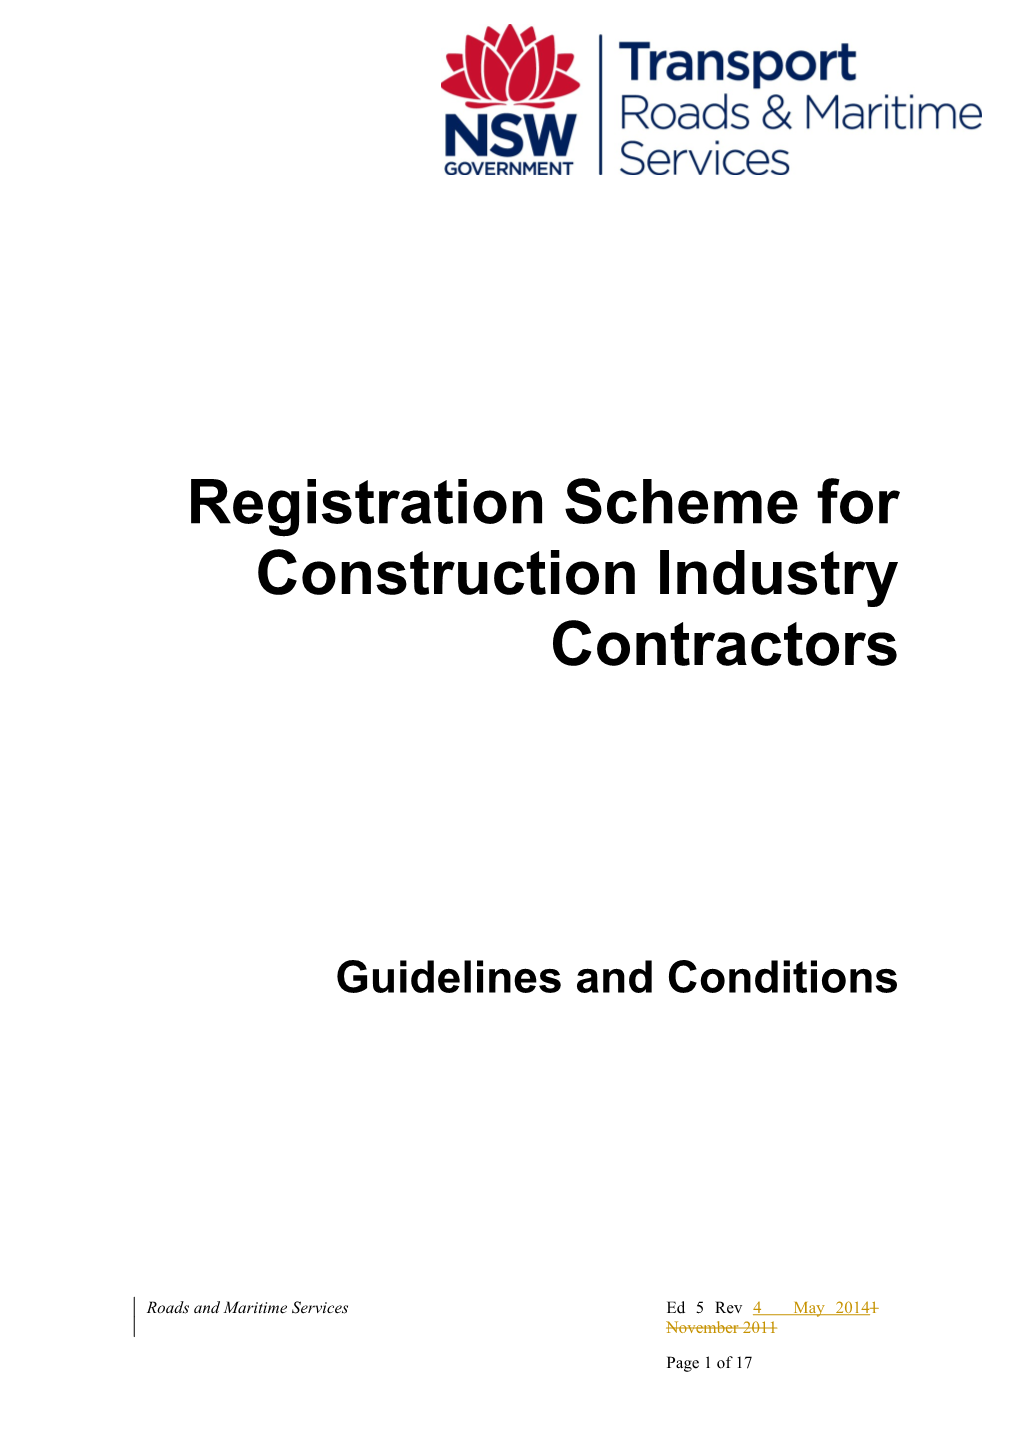 Registration Scheme for Construction Industry Contractors